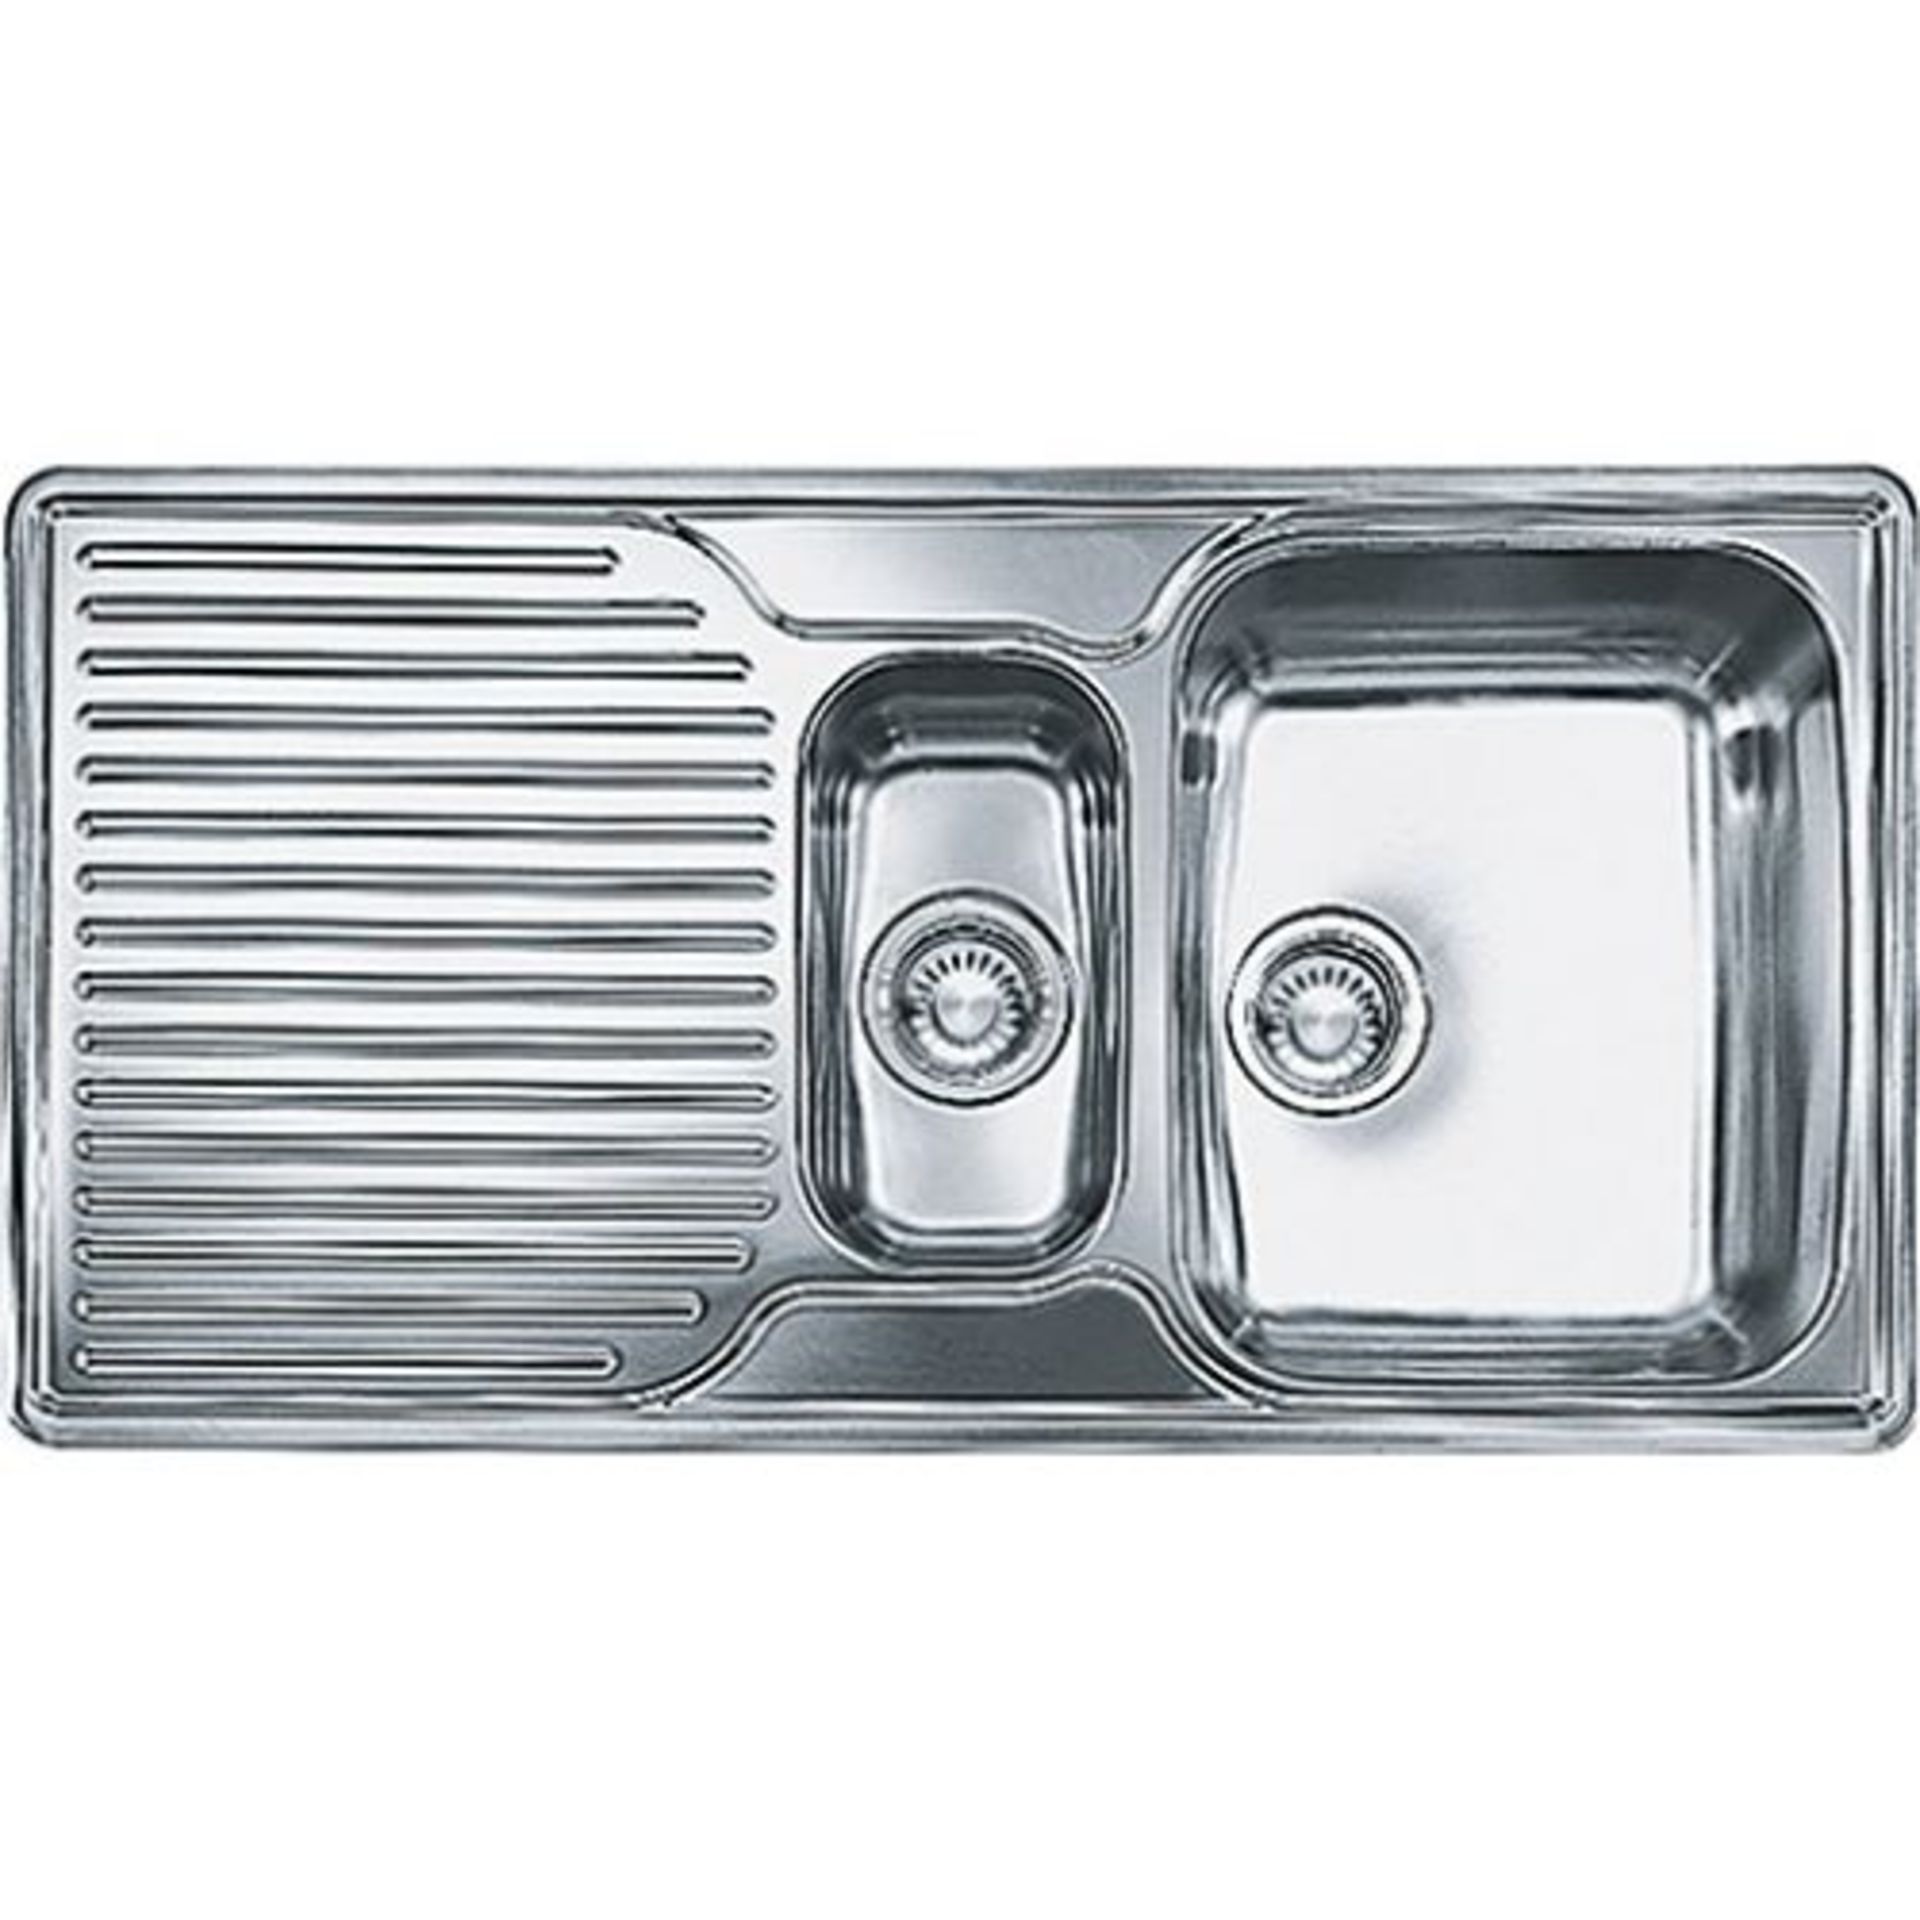 NEW (FR23) 2 X Franke Inset Kitchen Sink Ariane Arx 651p Lh Stainless Steel. Cabinet Size 600.00